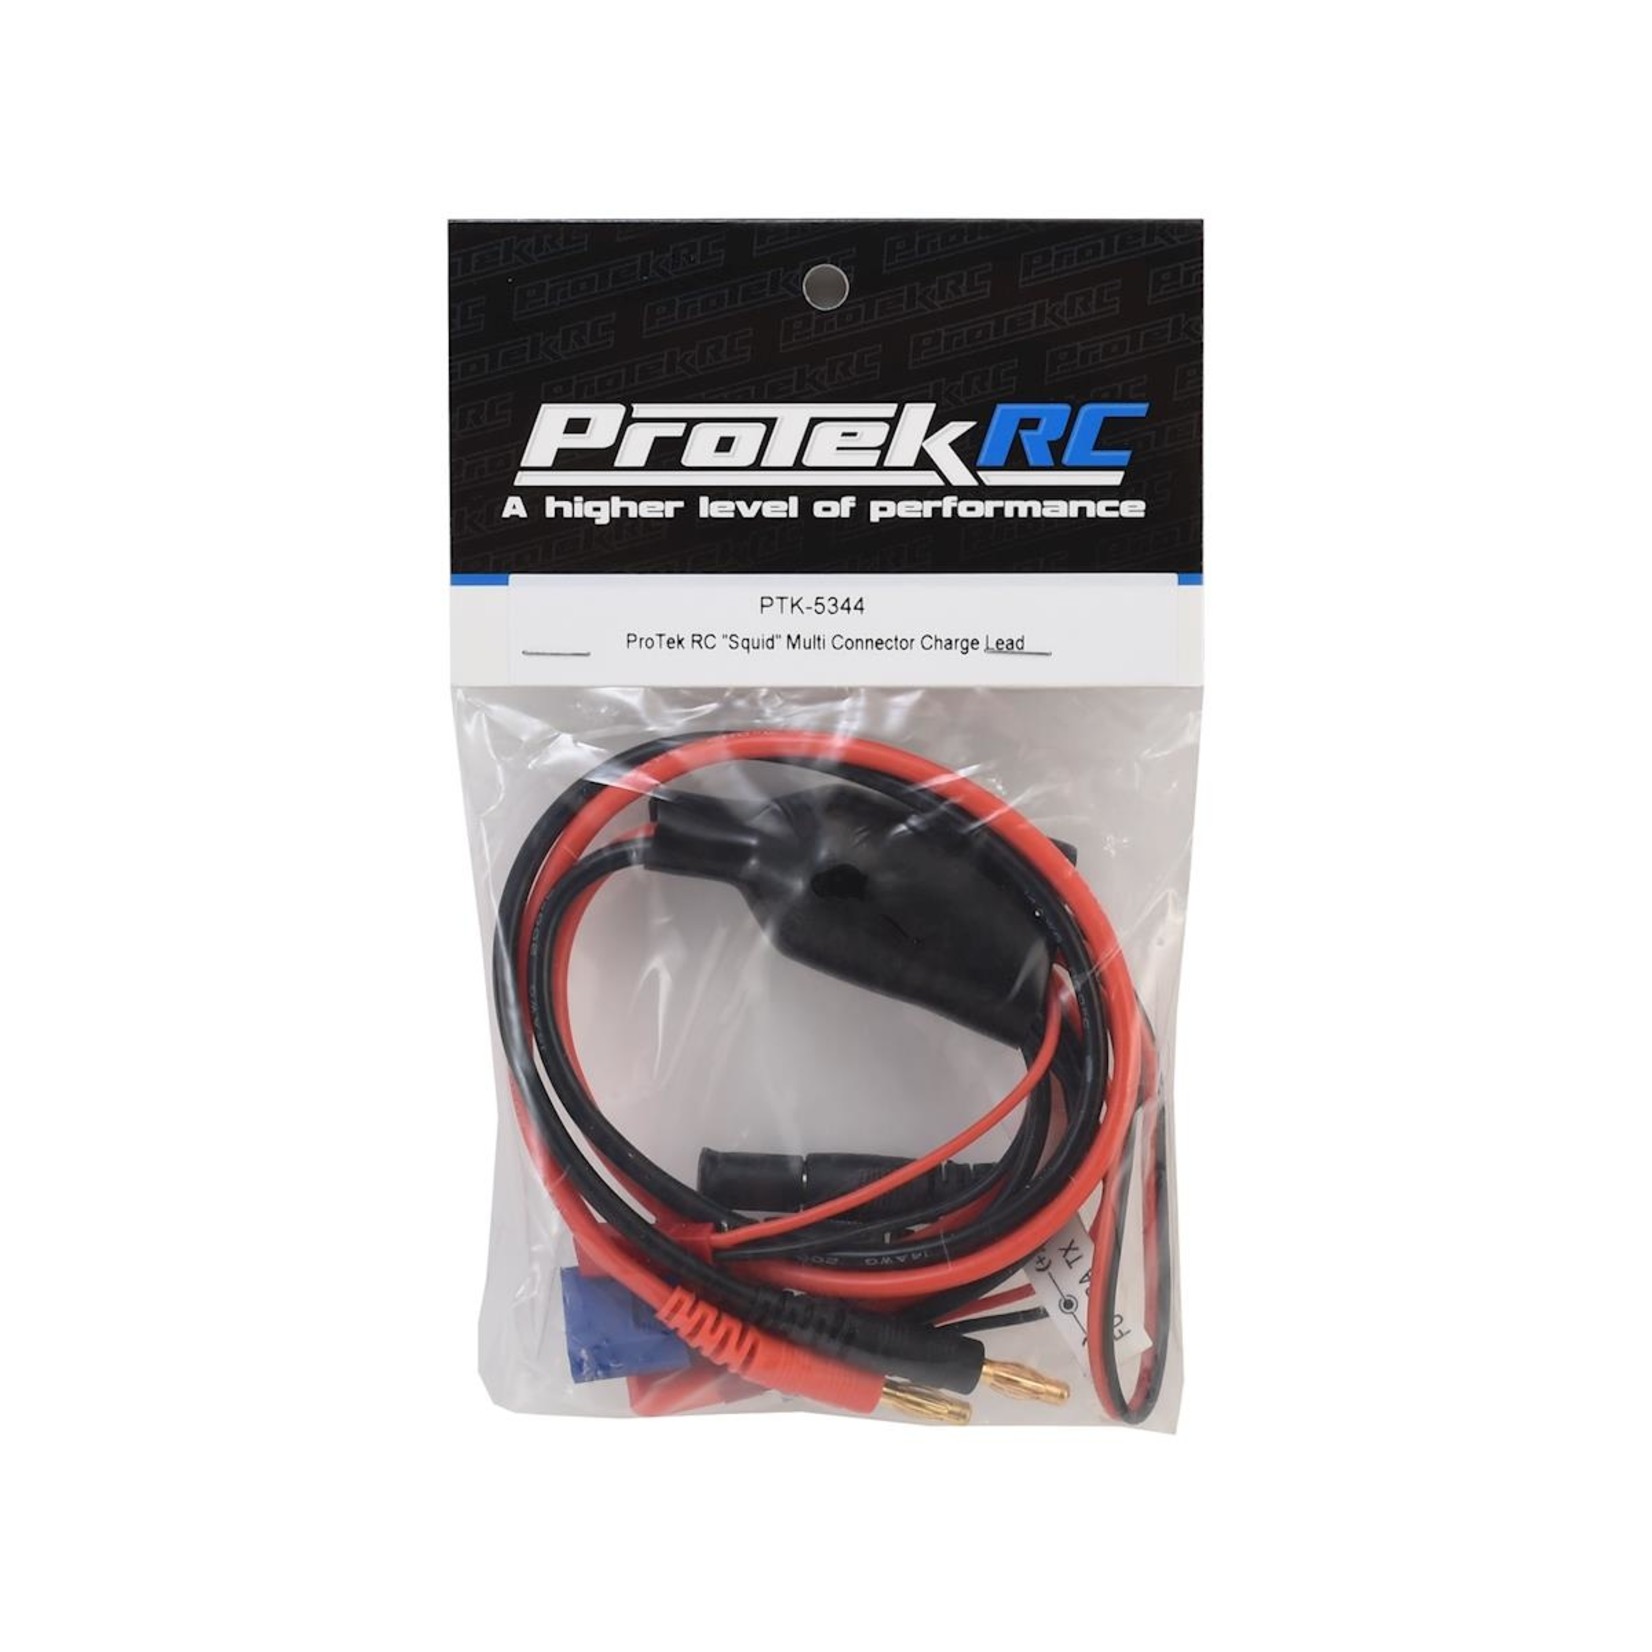 Protek R/C PTK-5344  ProTek RC "Squid" Multi Connector Charge Lead